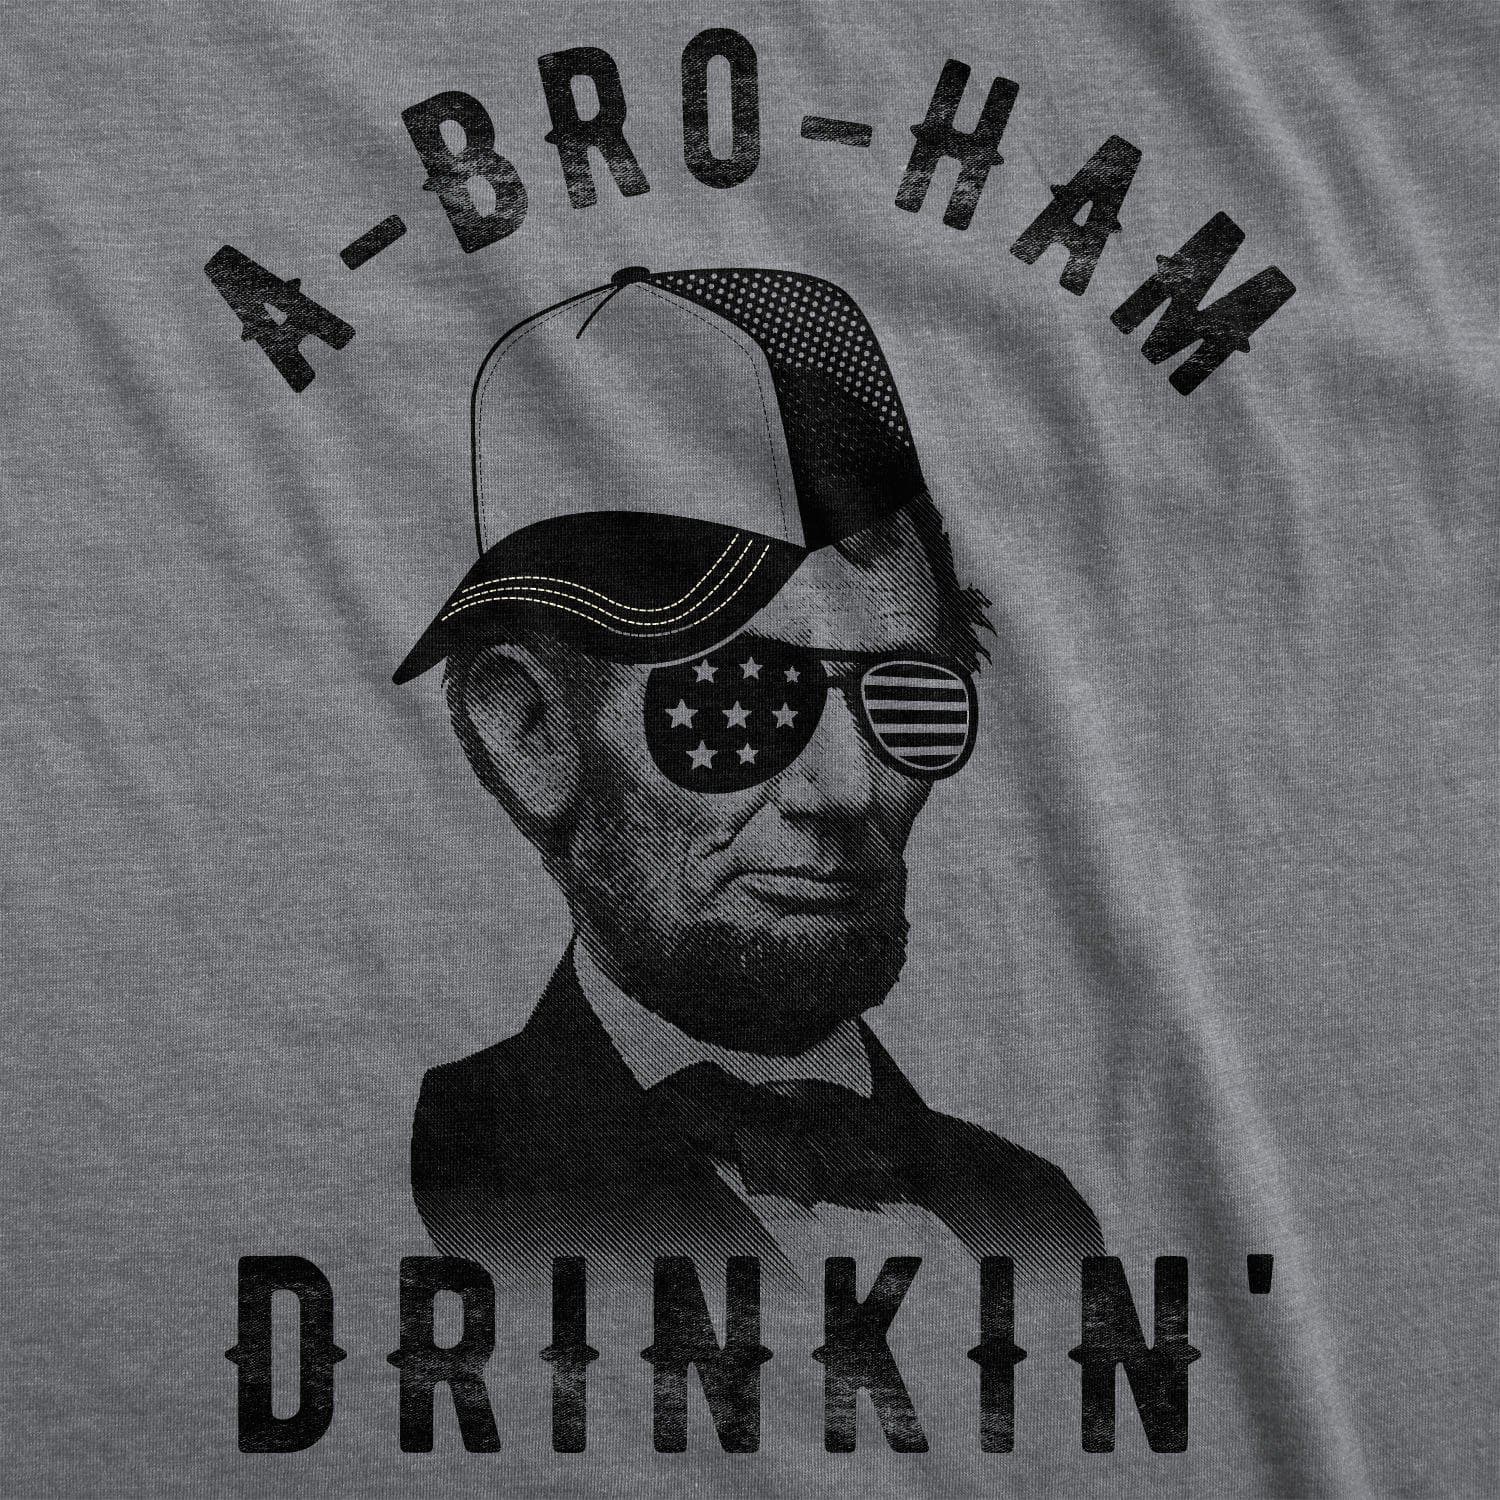 A-Bro-Ham Drinkin Men's Tshirt - Crazy Dog T-Shirts